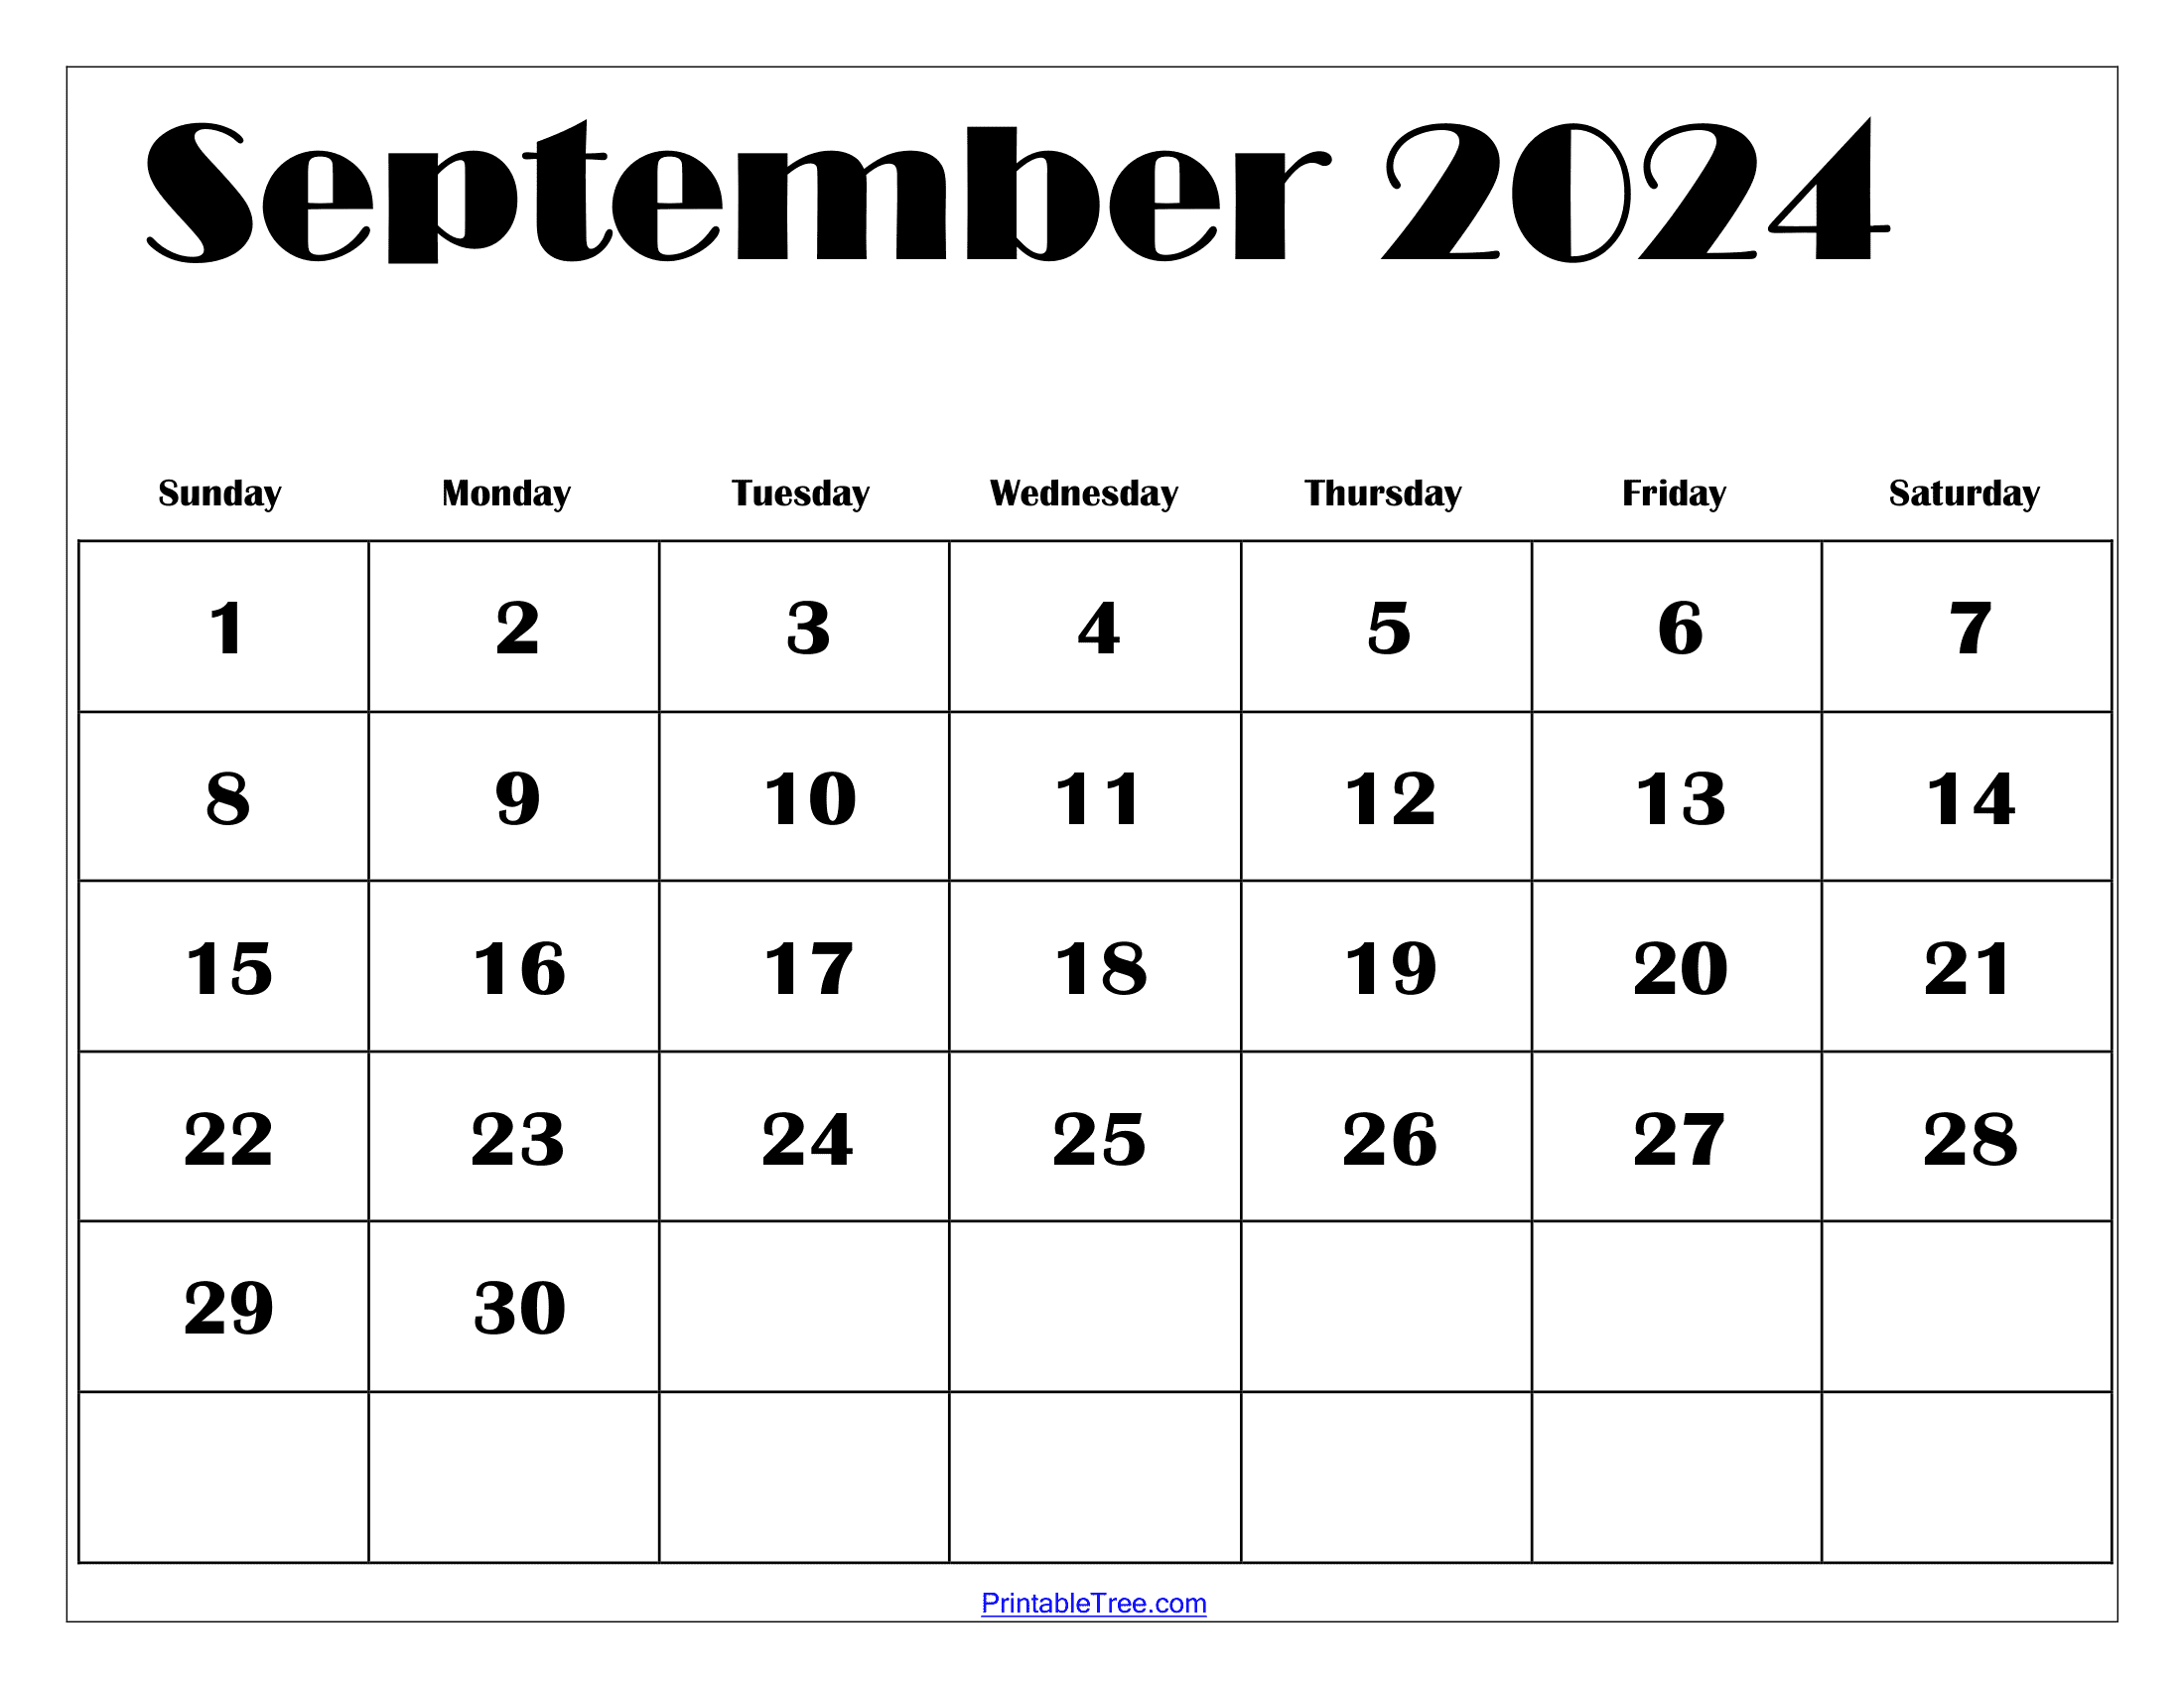 September 2024 Calendar Printable Pdf With Holidays pertaining to Free Printable August September 2024 Calendar